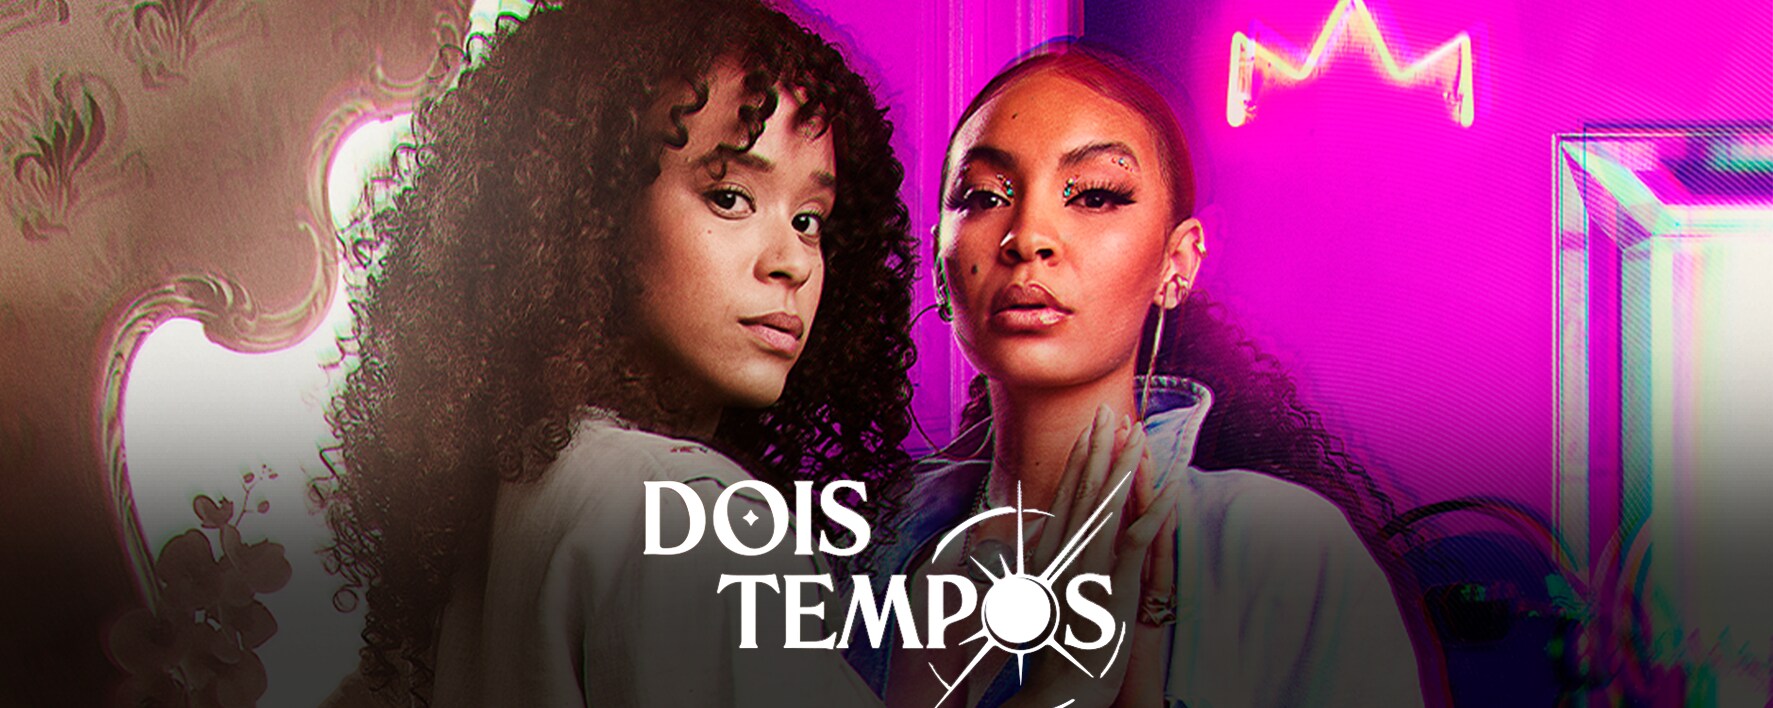 Top_Dois_Tempos